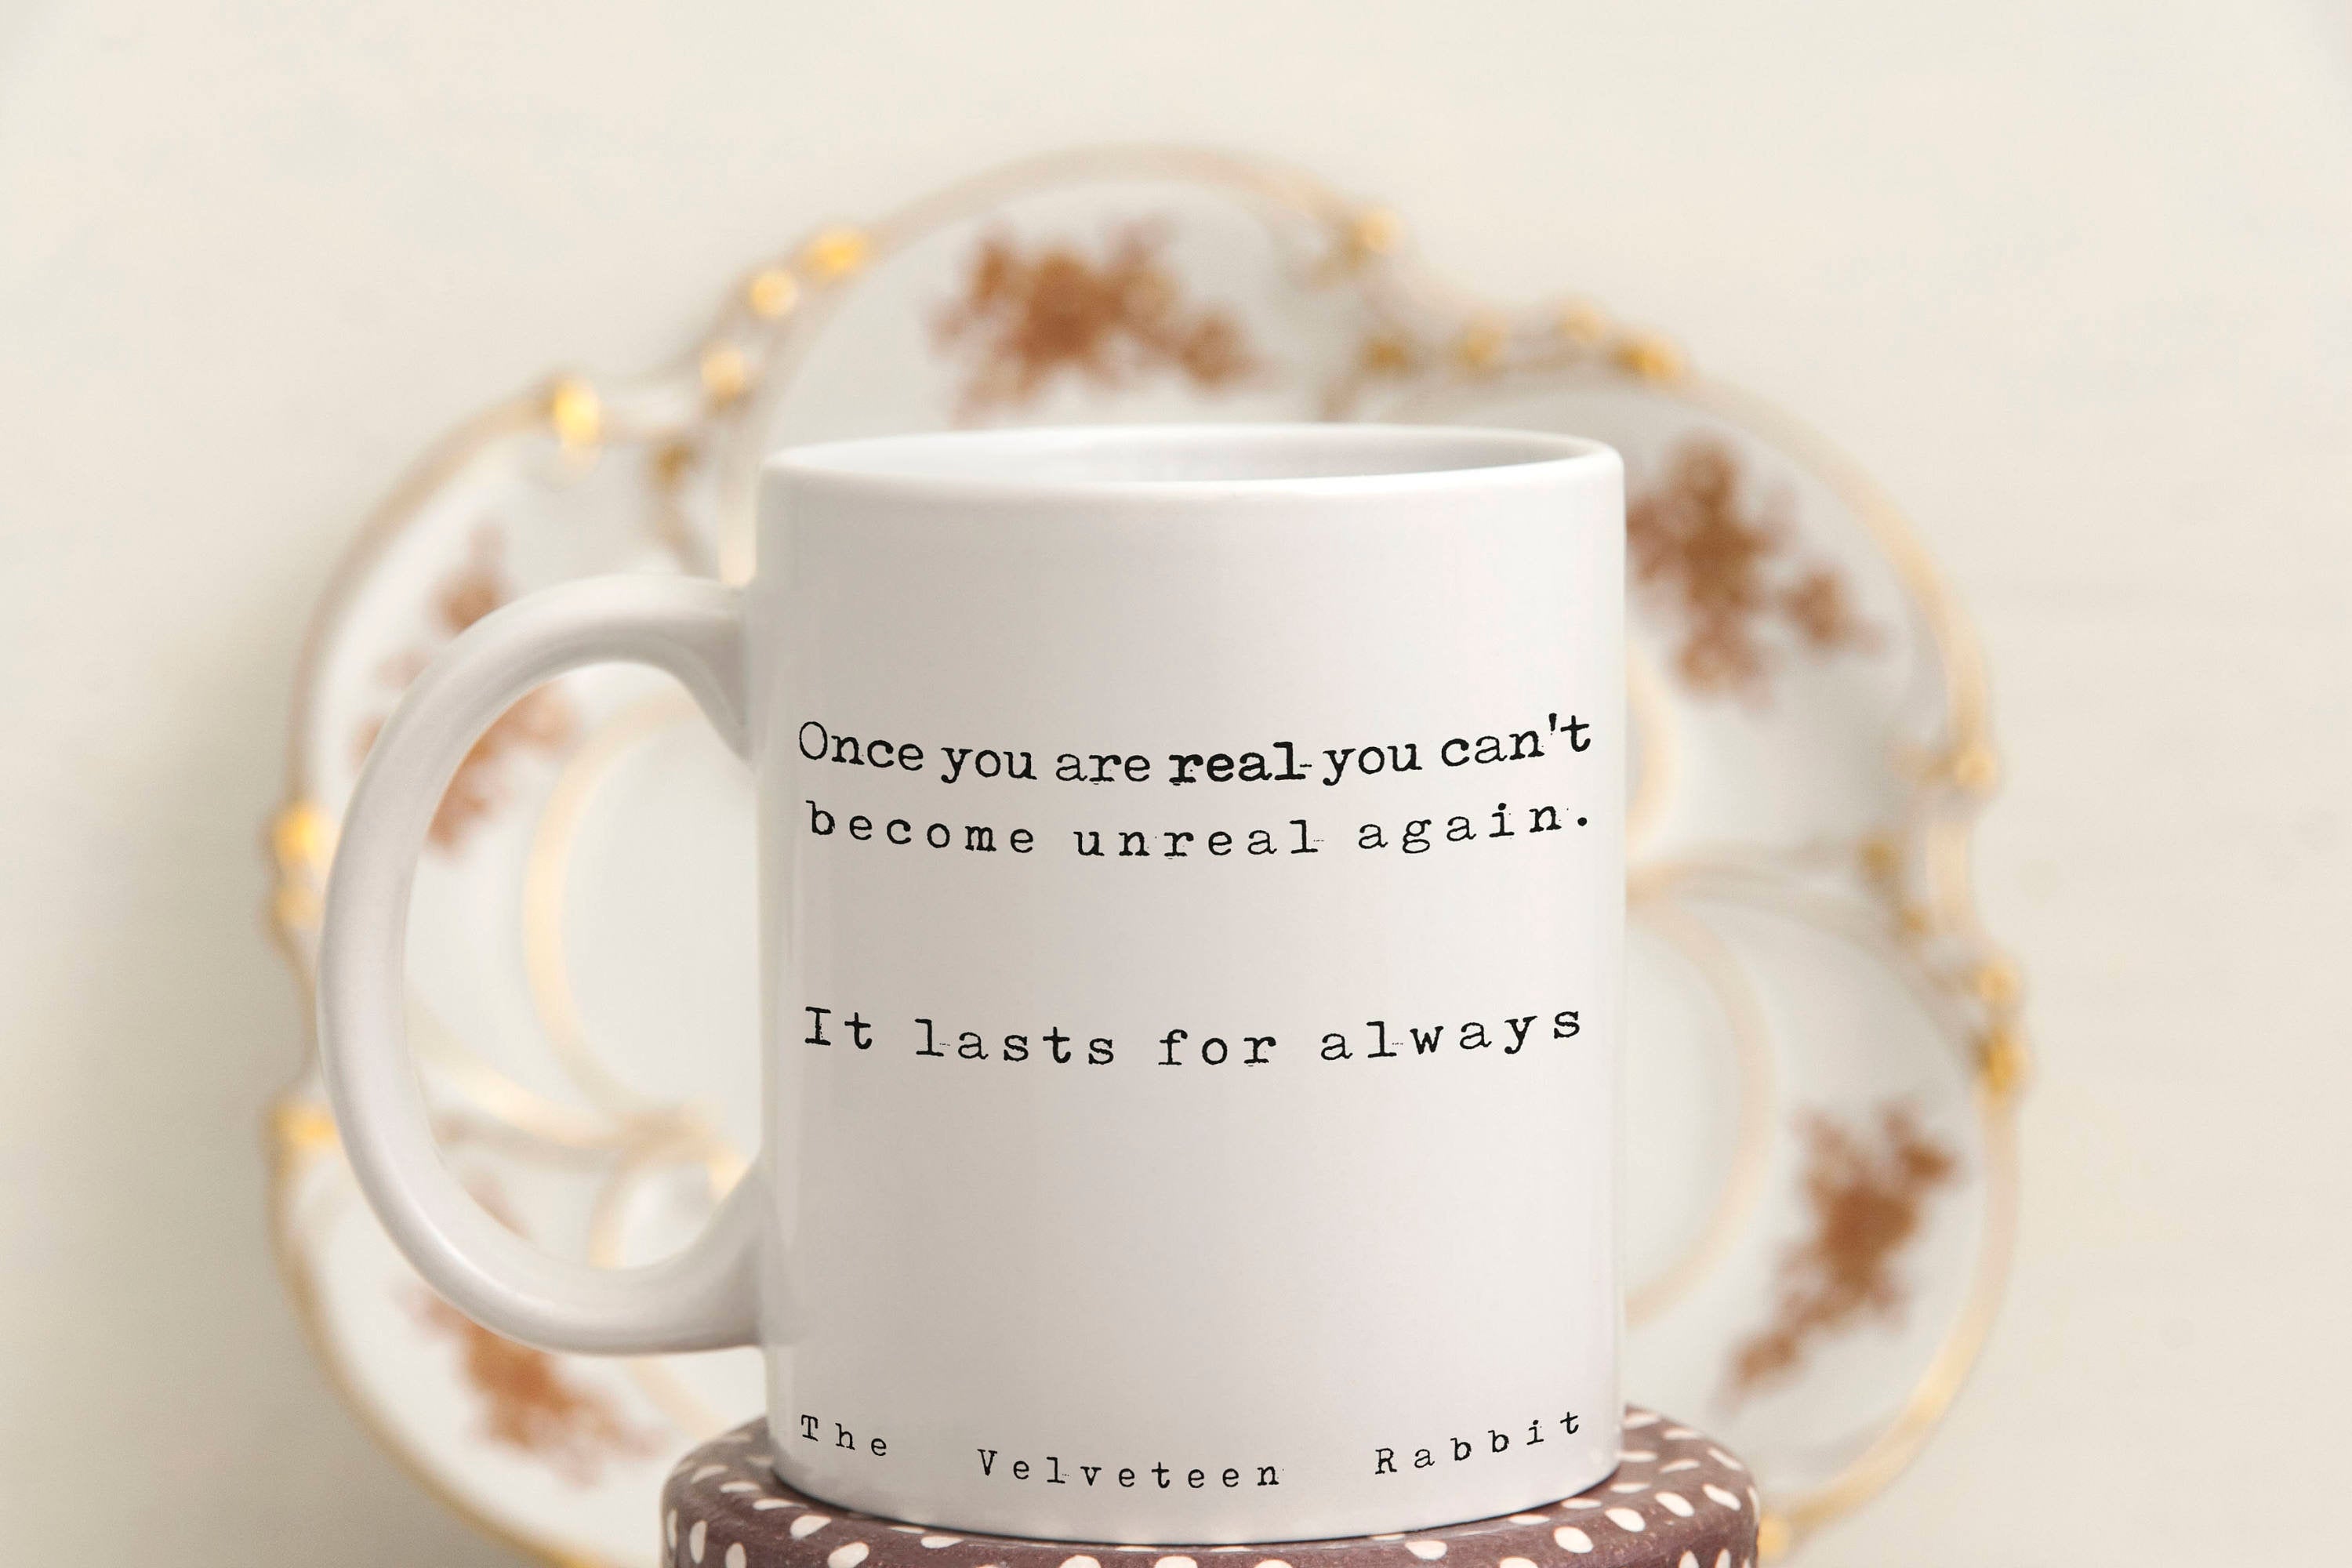 Velveteen Rabbit Quote Coffee Mug, Inspirational Gift bookworm Mug, tea mug with book quote